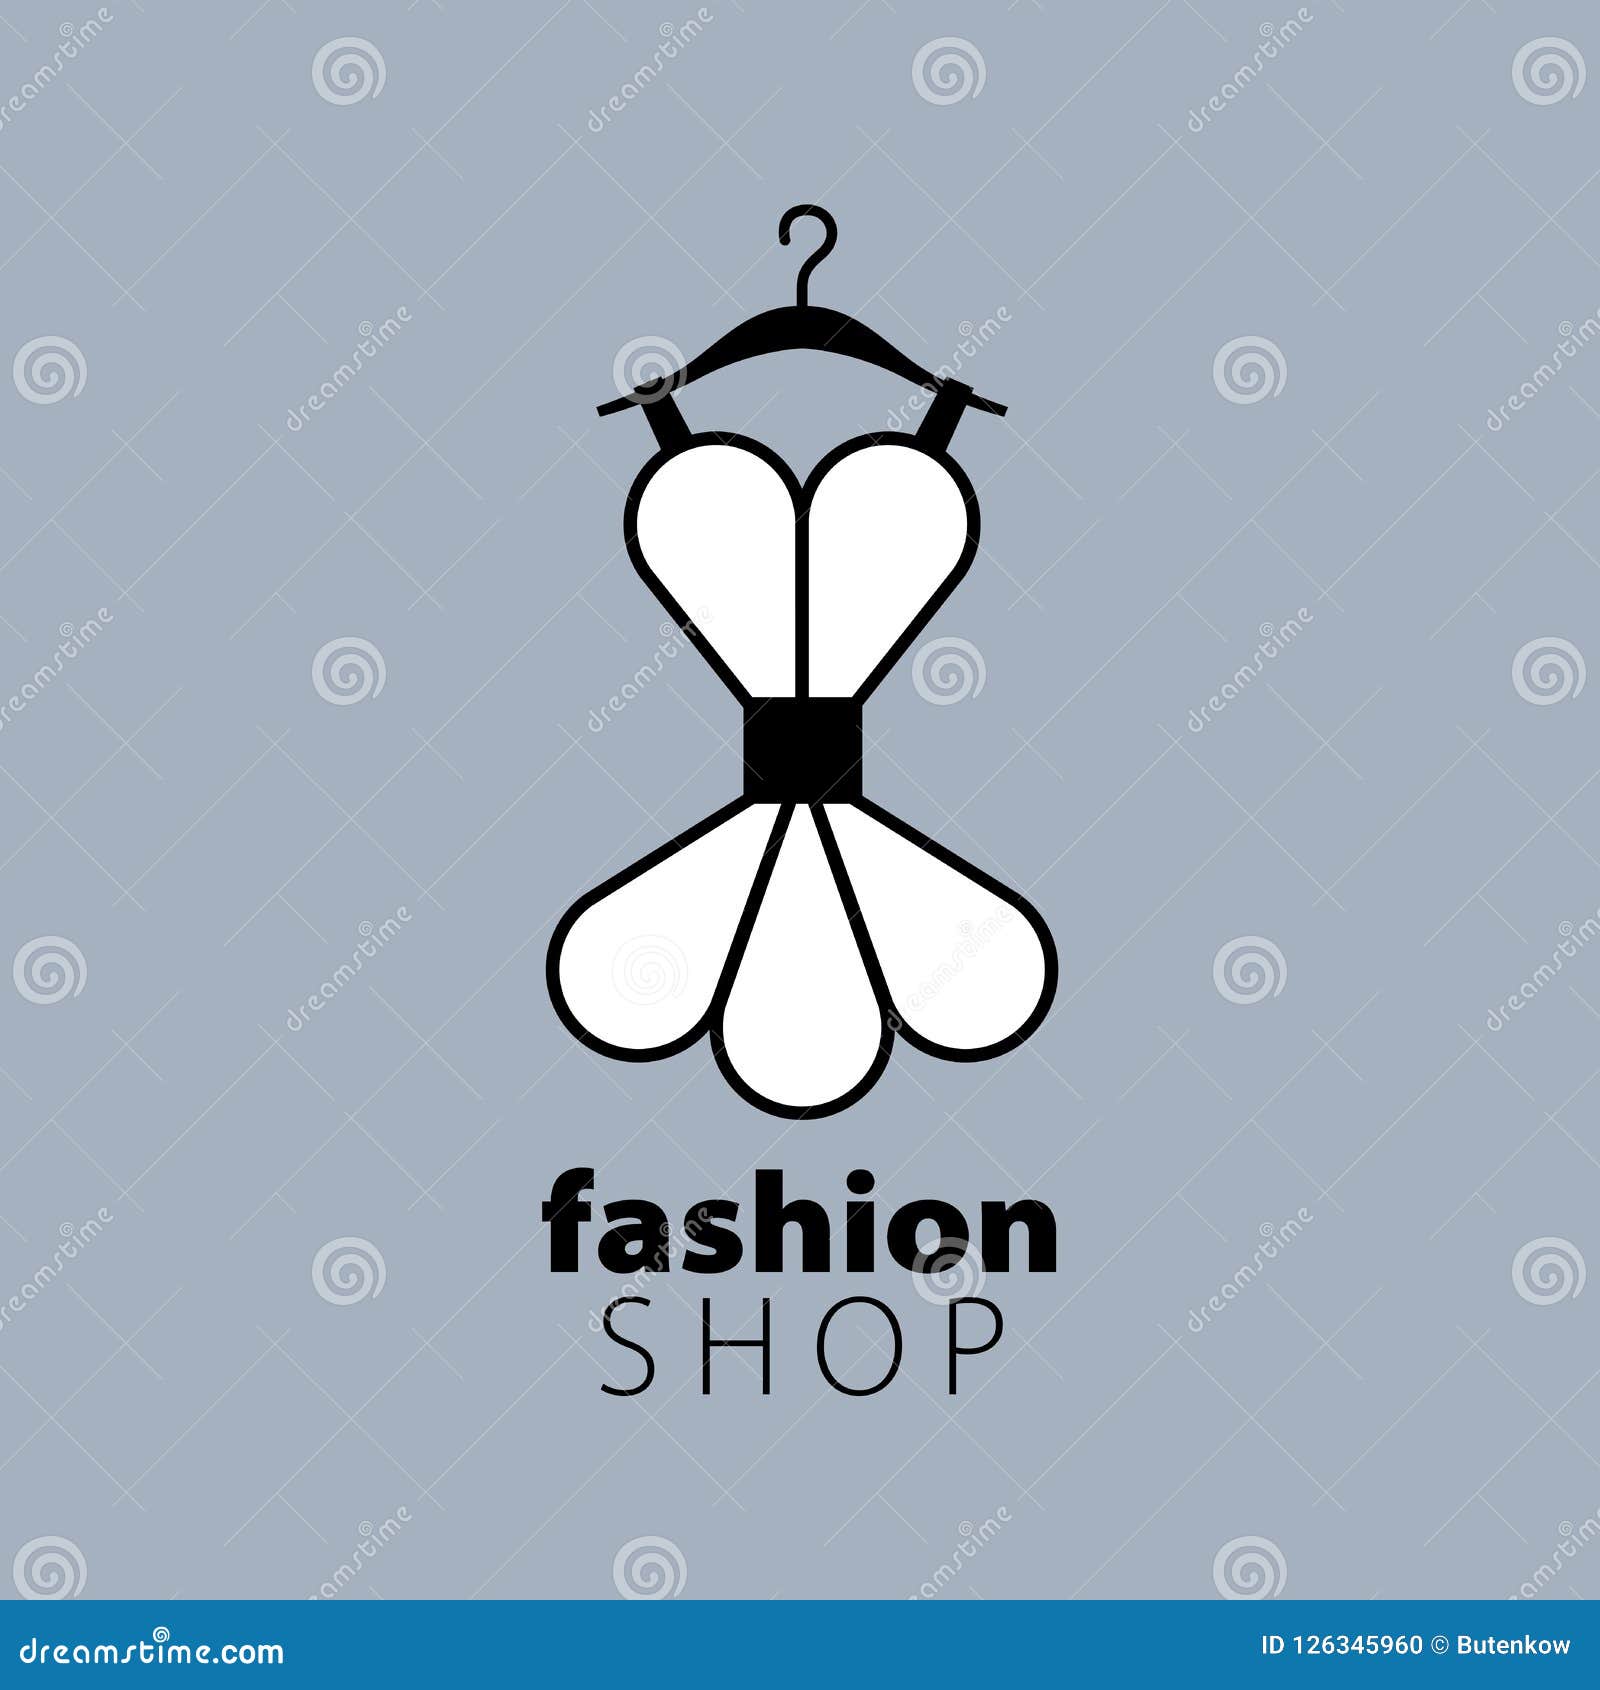 Vector logo clothing stock vector. Illustration of black - 126345960